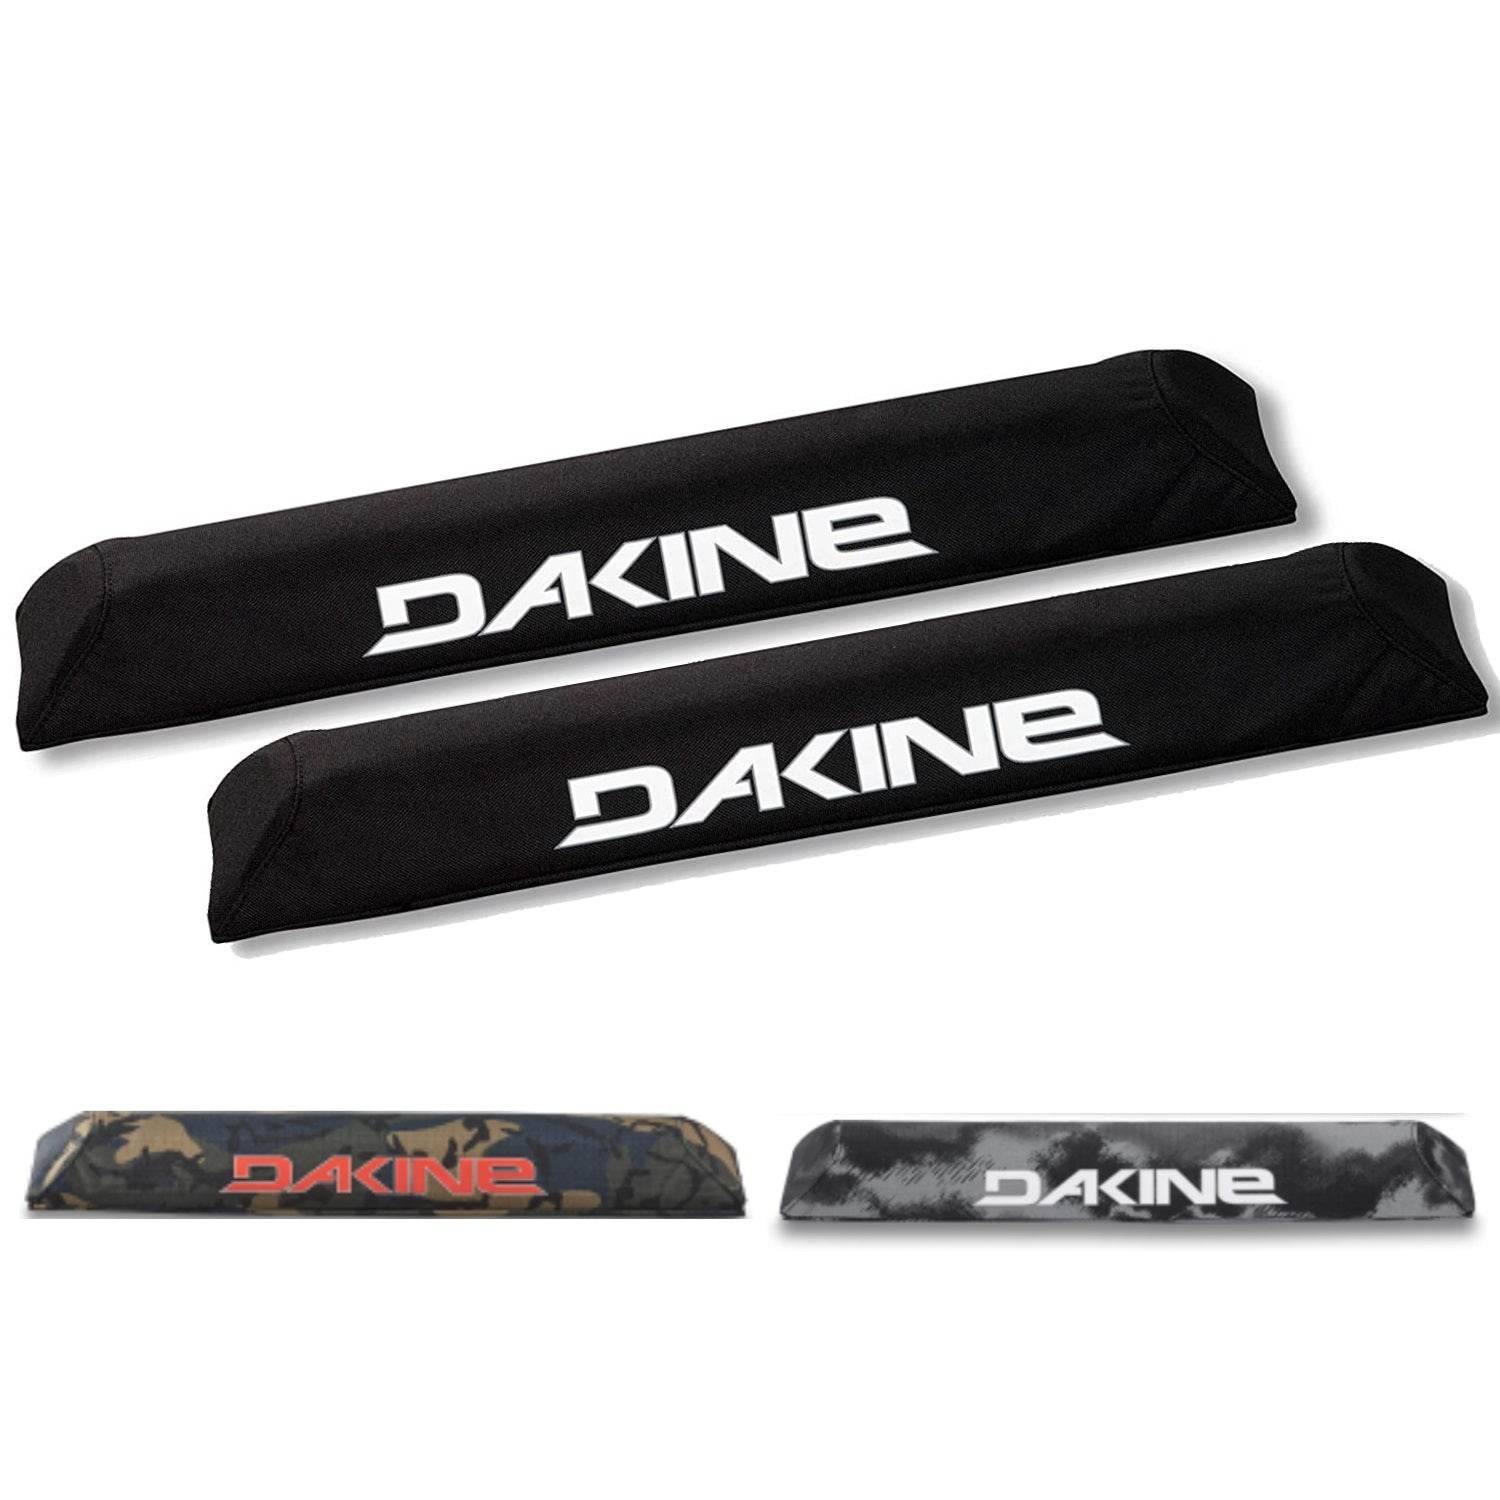 DaKine Surf Aero Rack Pads - Sizes: 18, 28 and 34 inches